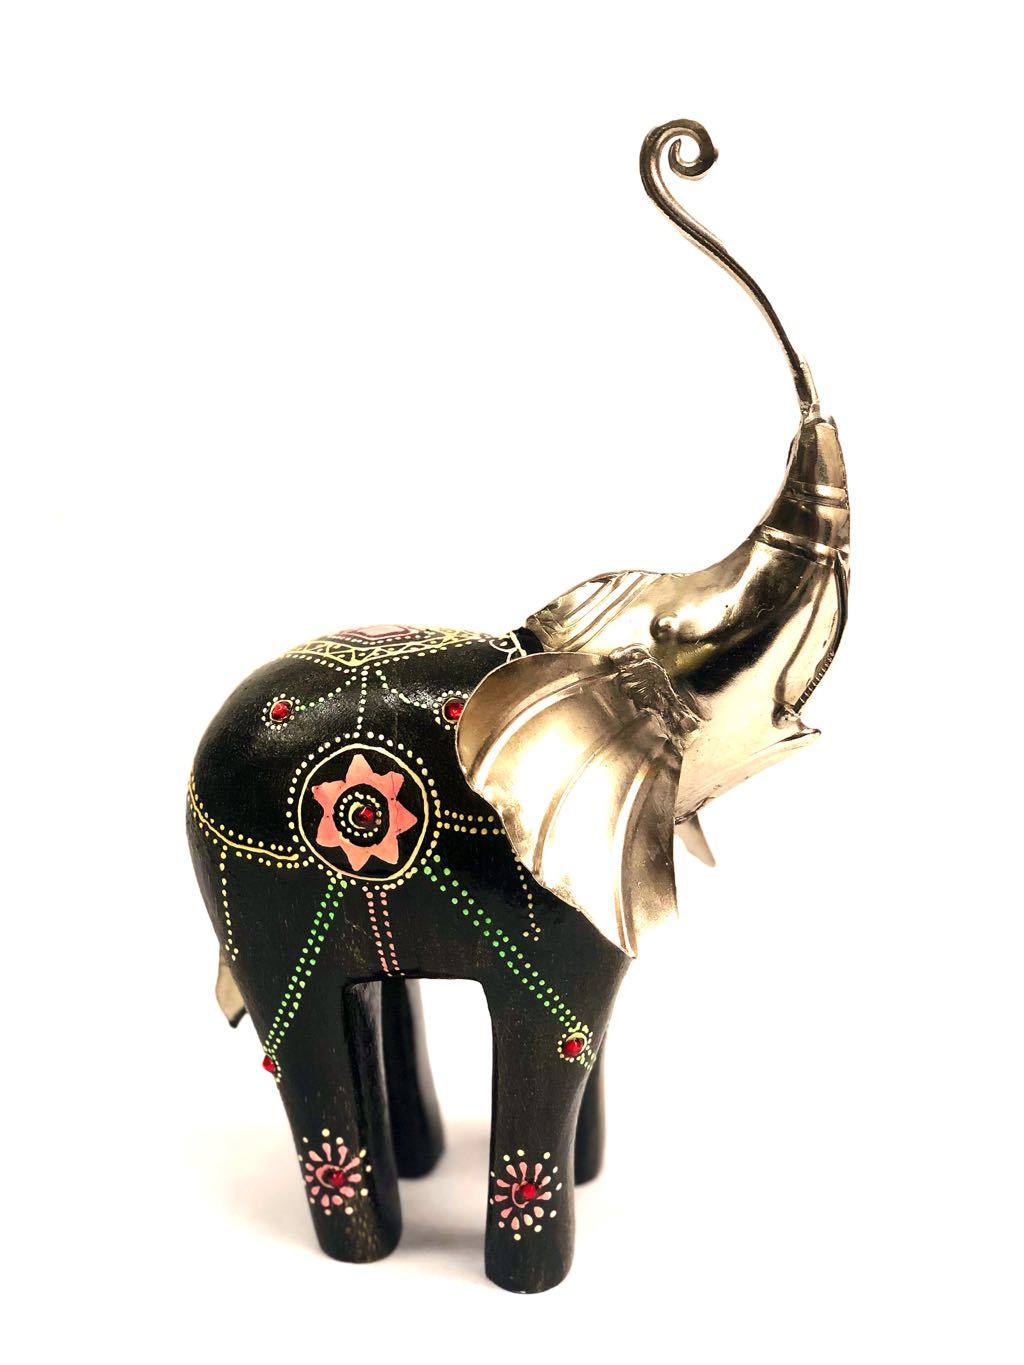 Wooden & Metal Elephant Unique Creations By Indian Artisans Tamrapatra - Tanariri Hastakala